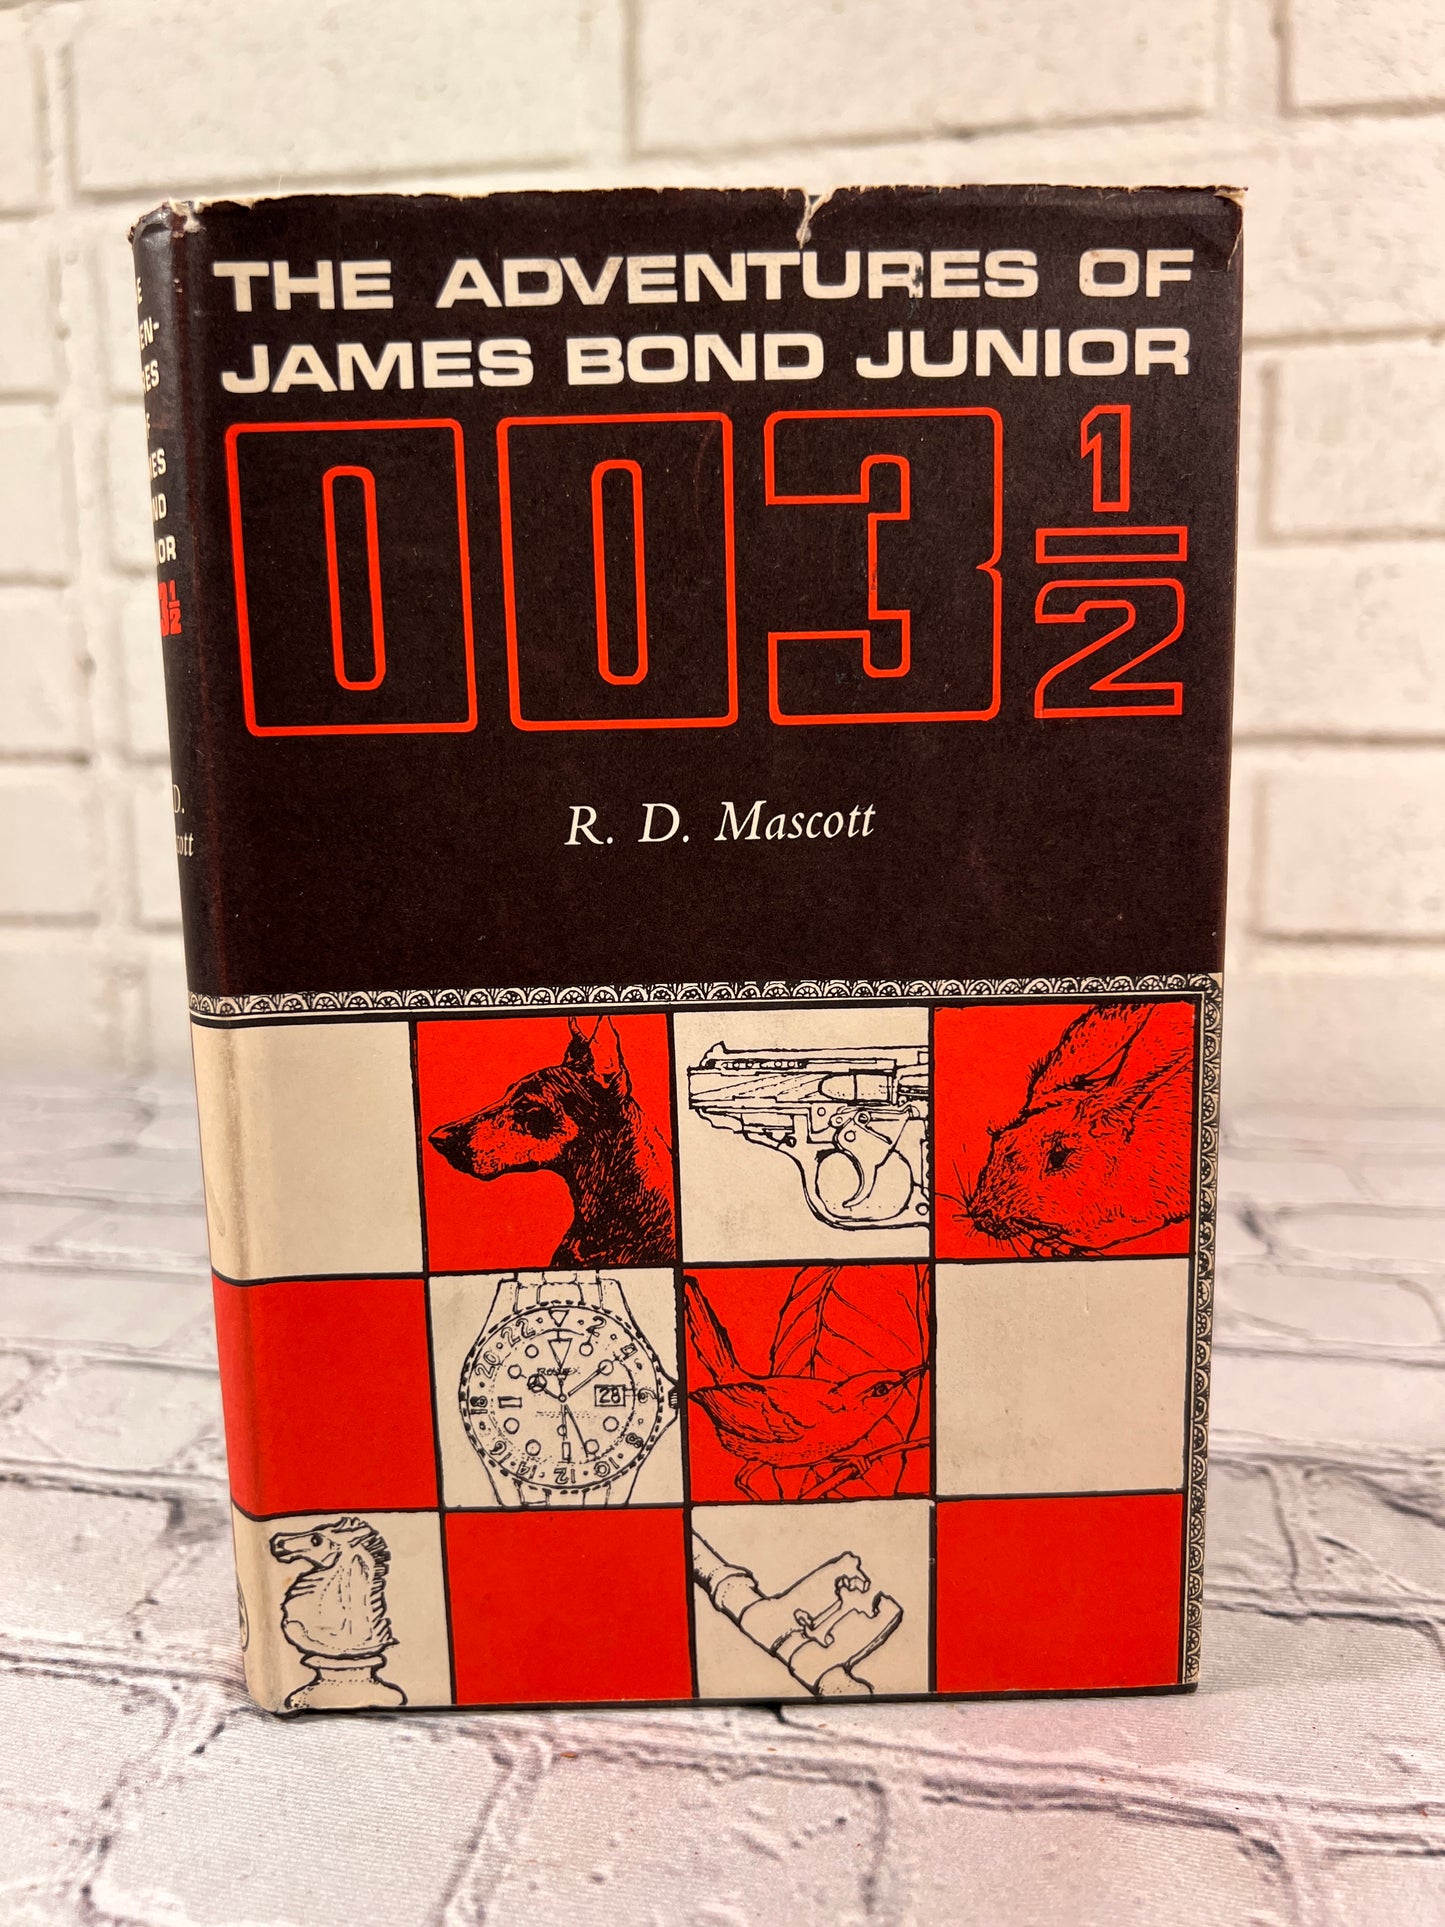 The Adventures of James Bond Junior: 003 1/2 by Mascott, R. D. [1967 · 1st Edition]